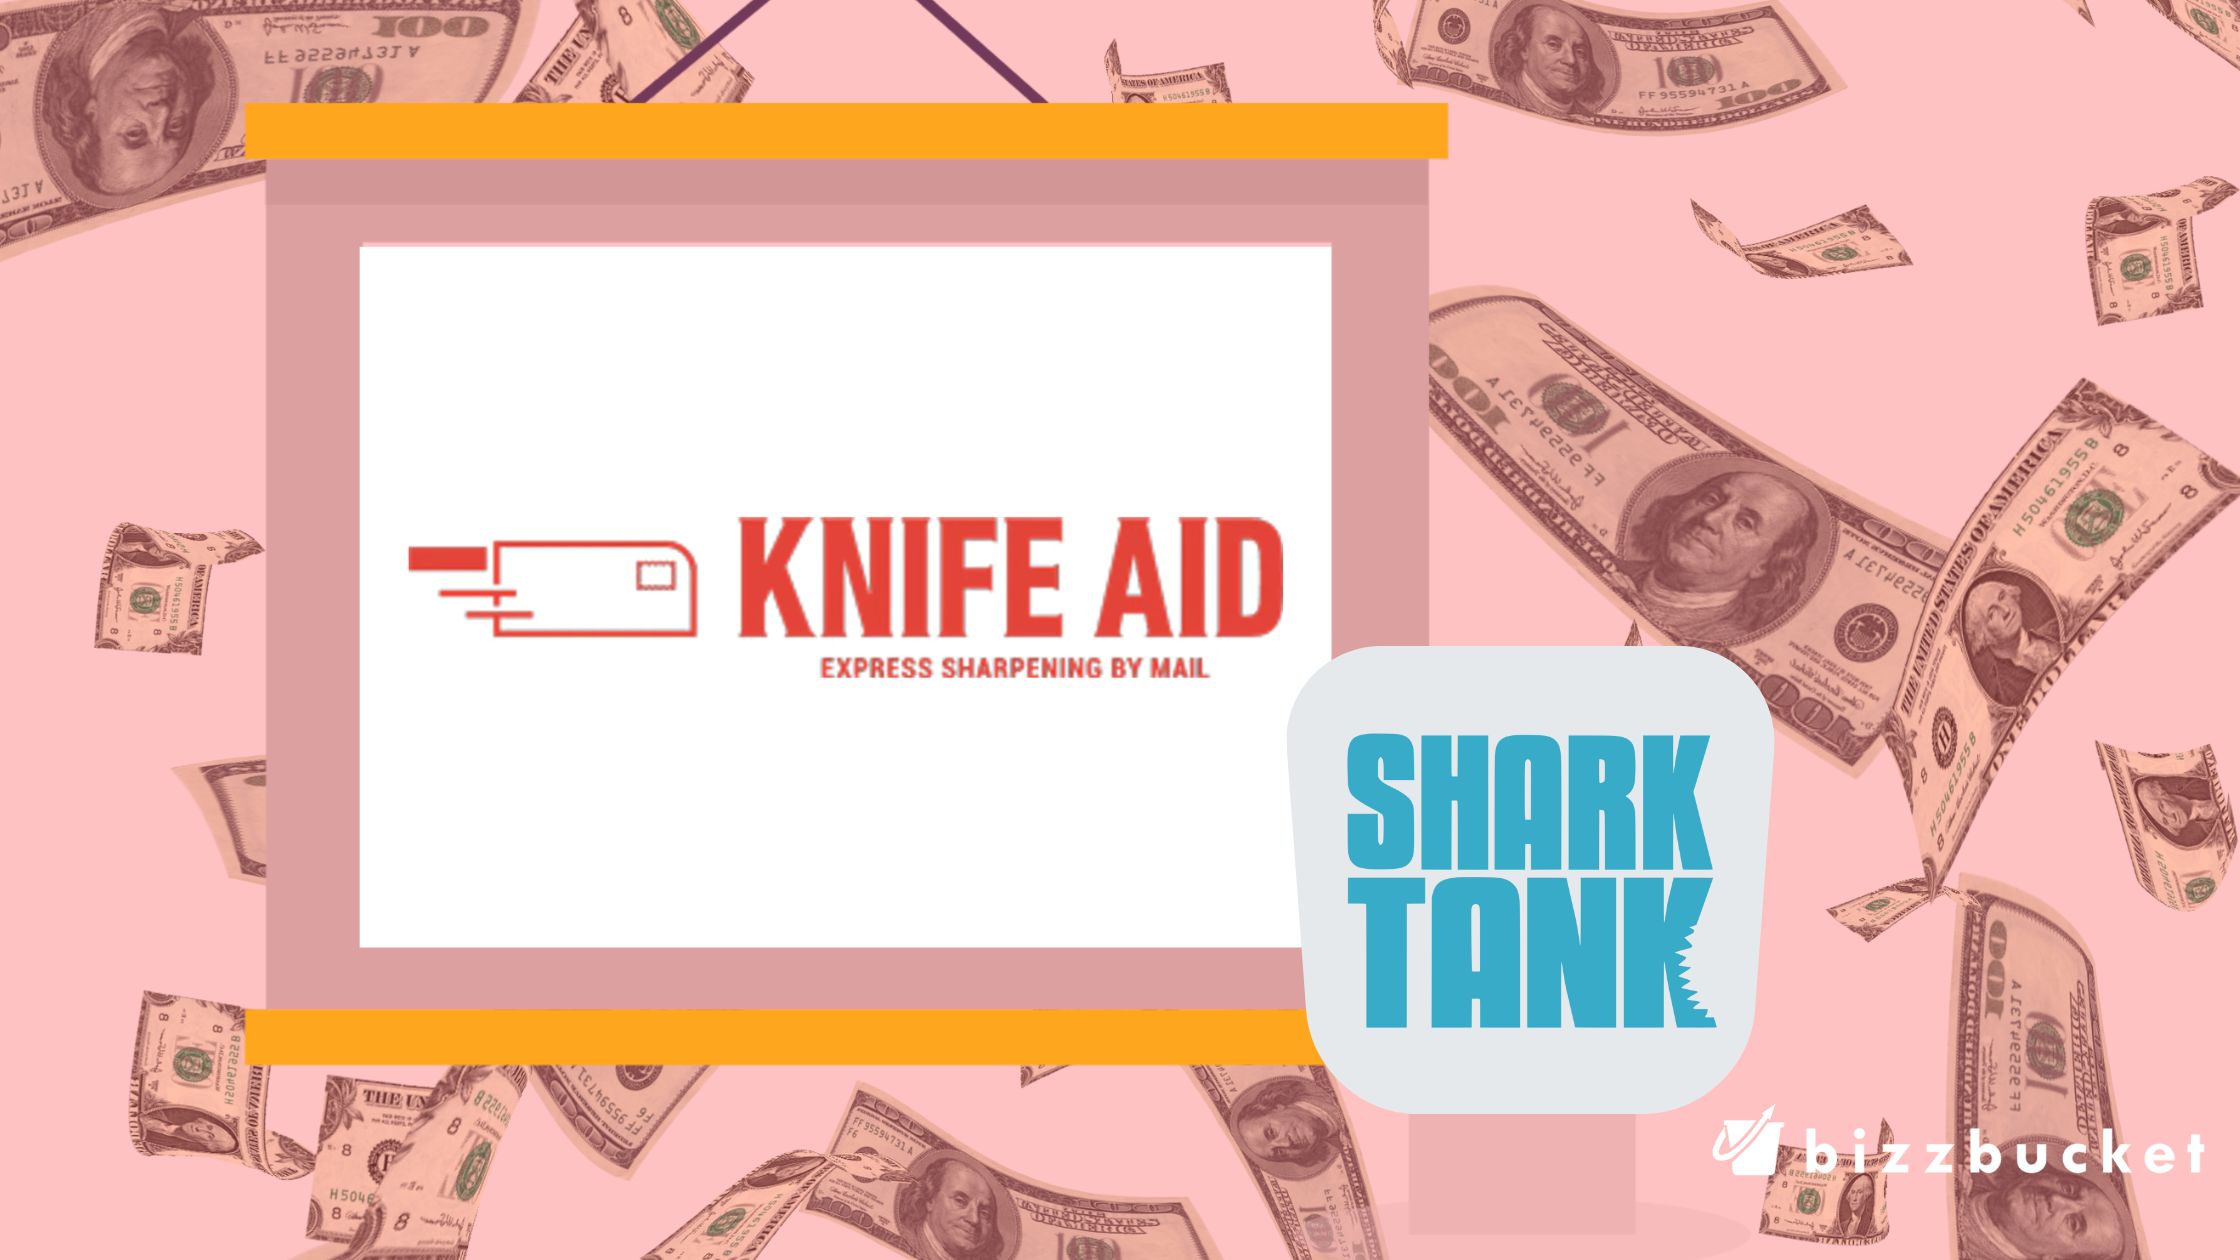 Knife Aid shark tank update